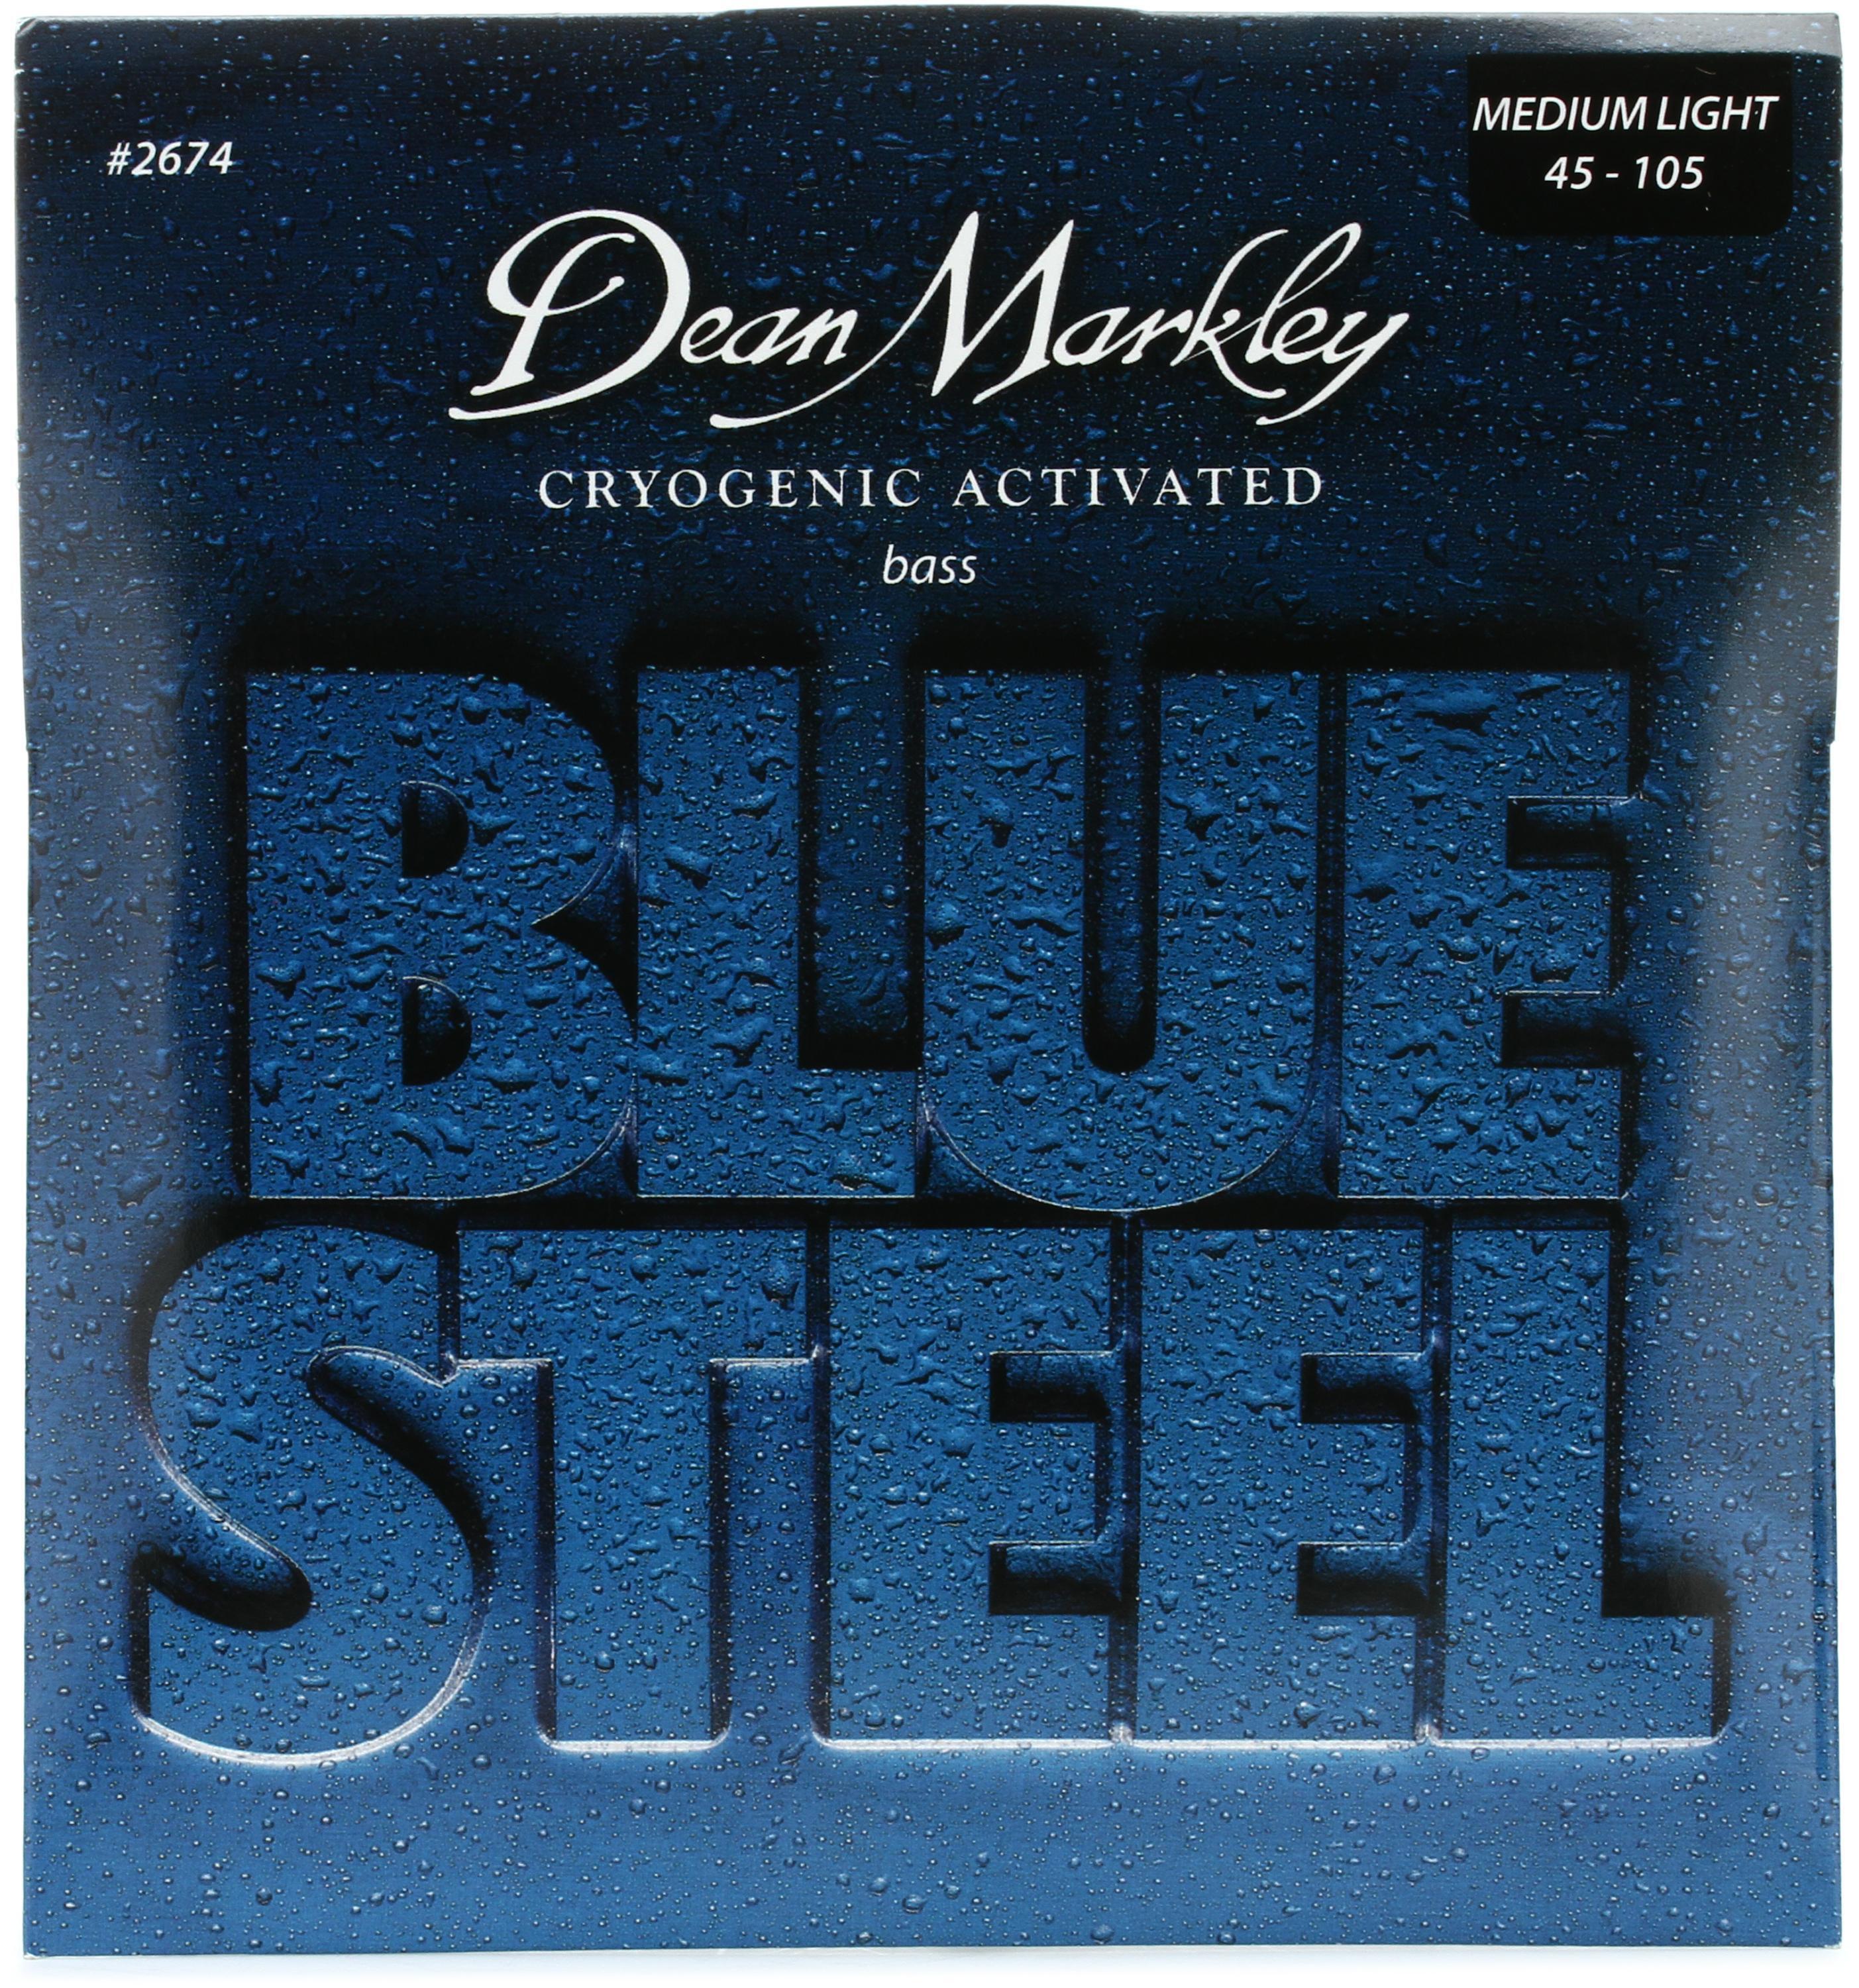 Bundled Item: Dean Markley 2674 Blue Steel Bass Guitar Strings - .045-.105 Medium Light